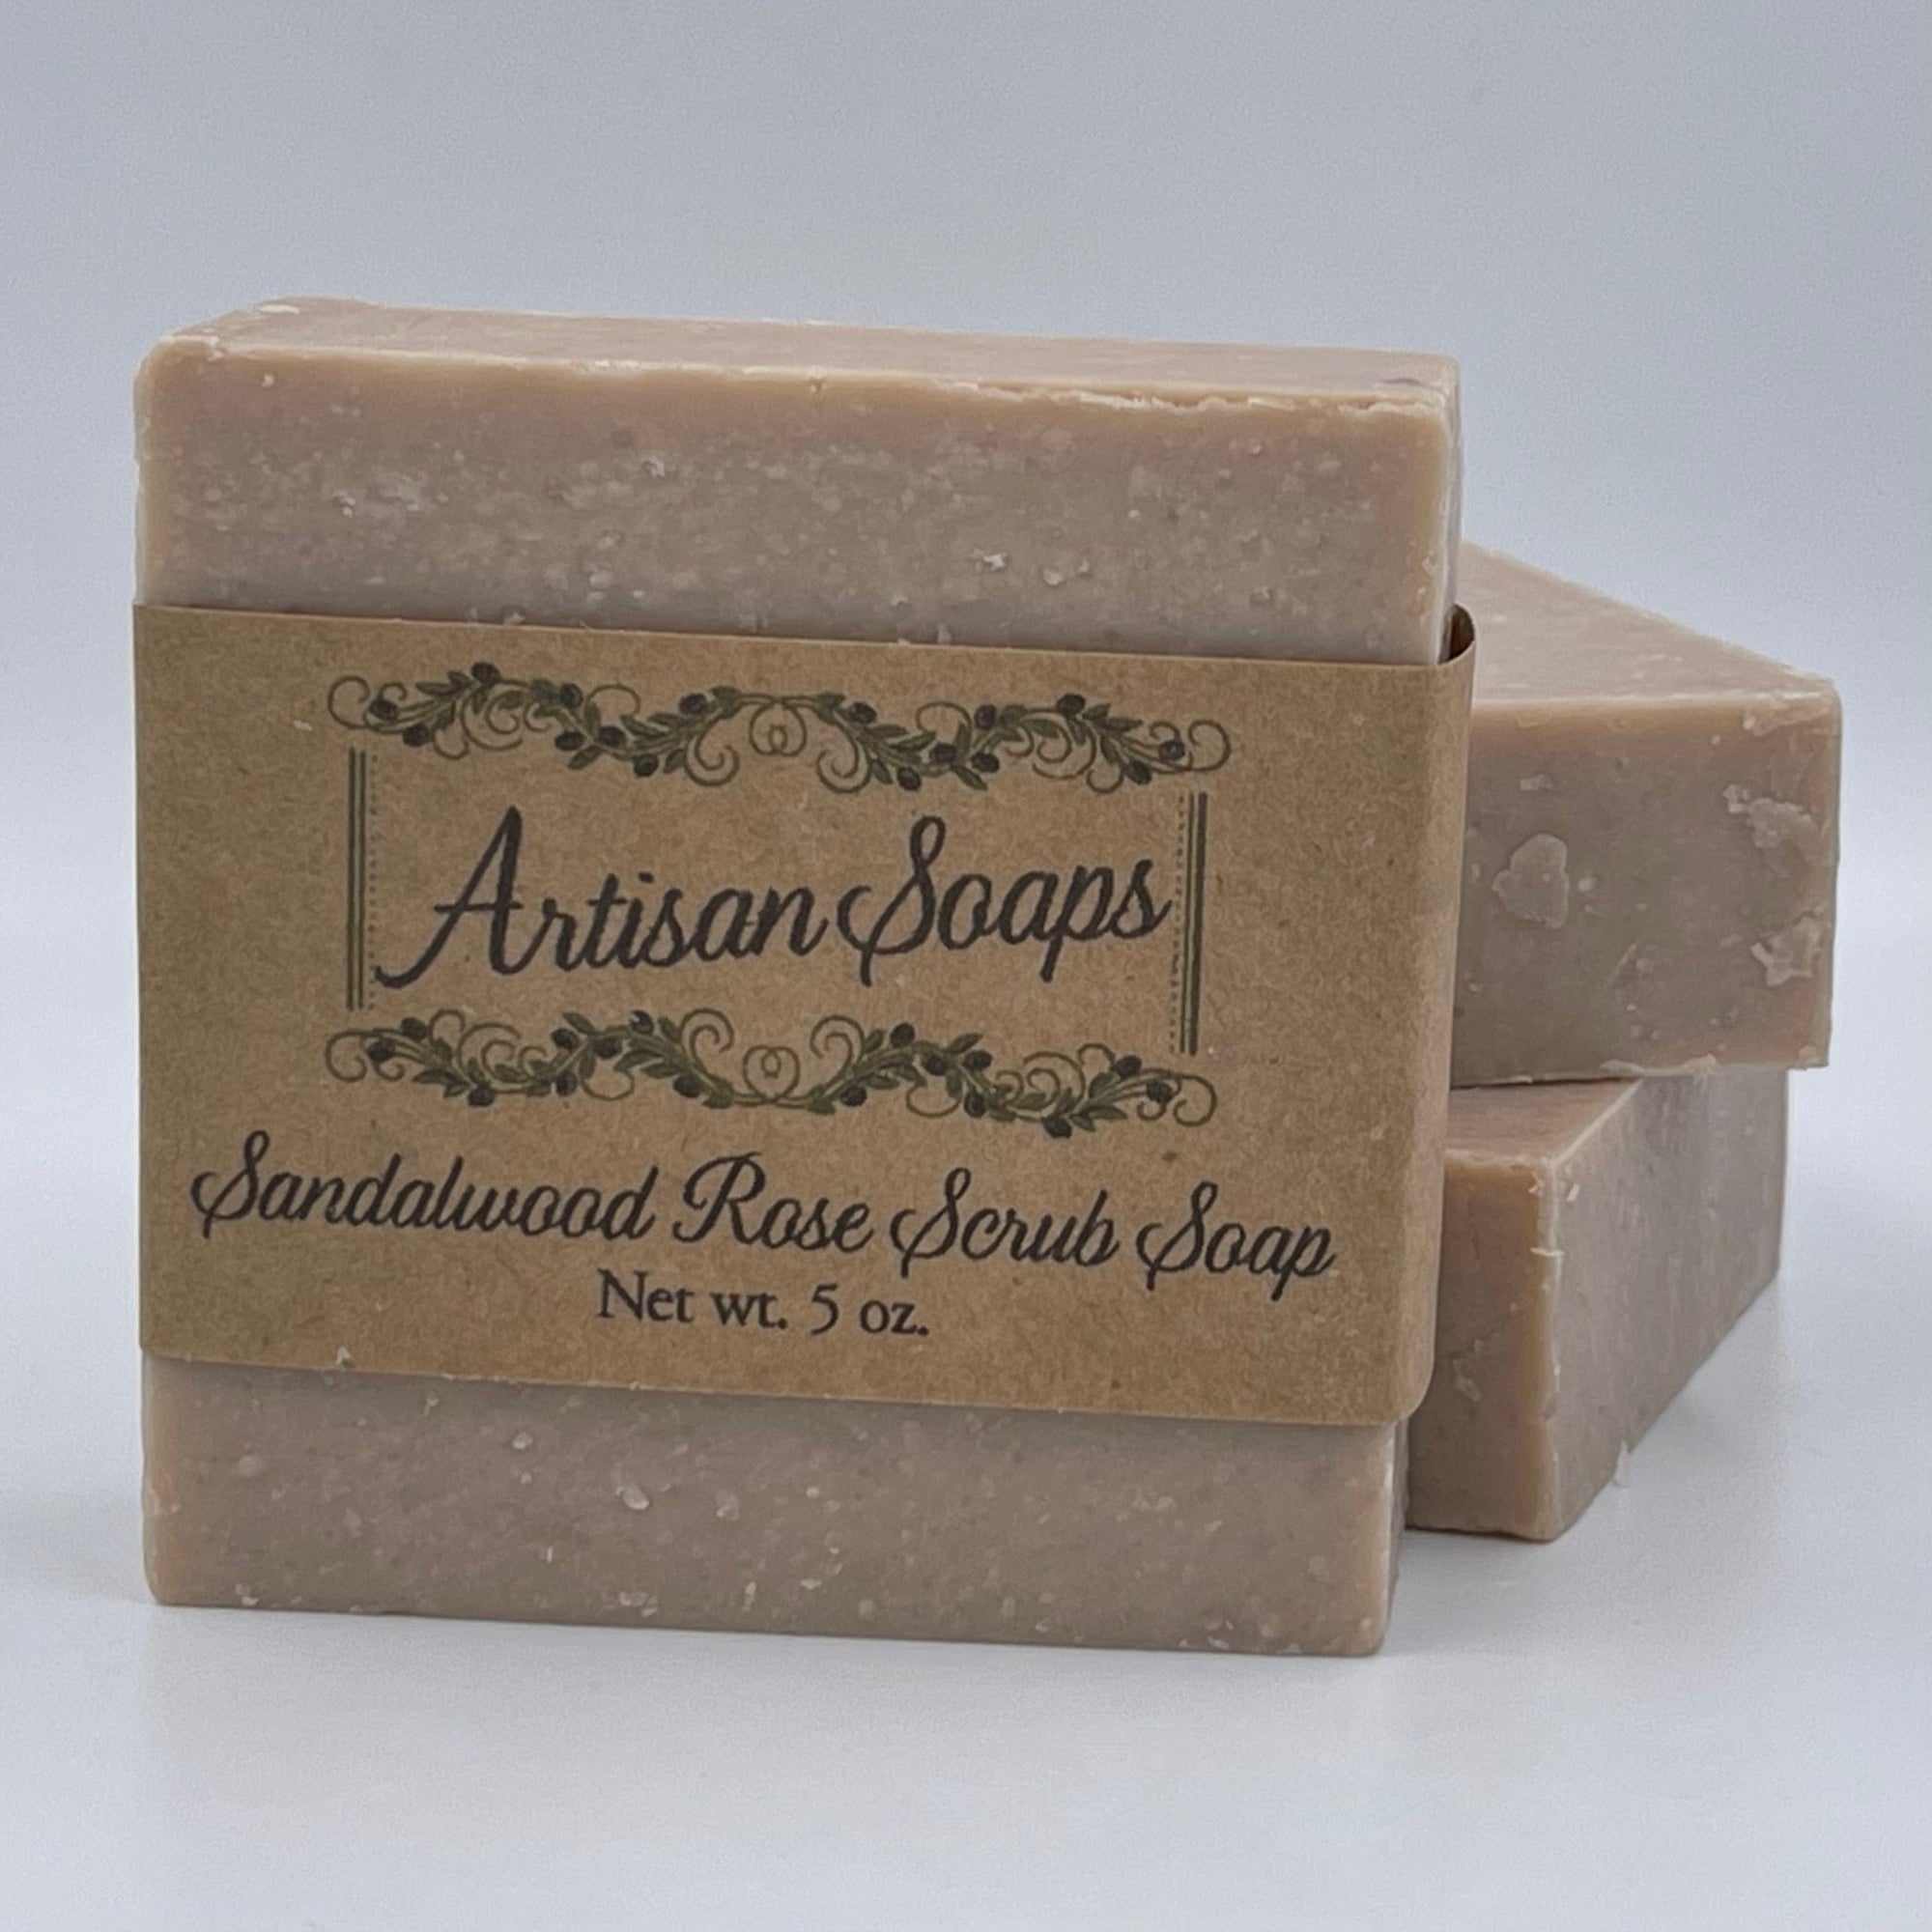 Sandalwood Rose Scrub Soap